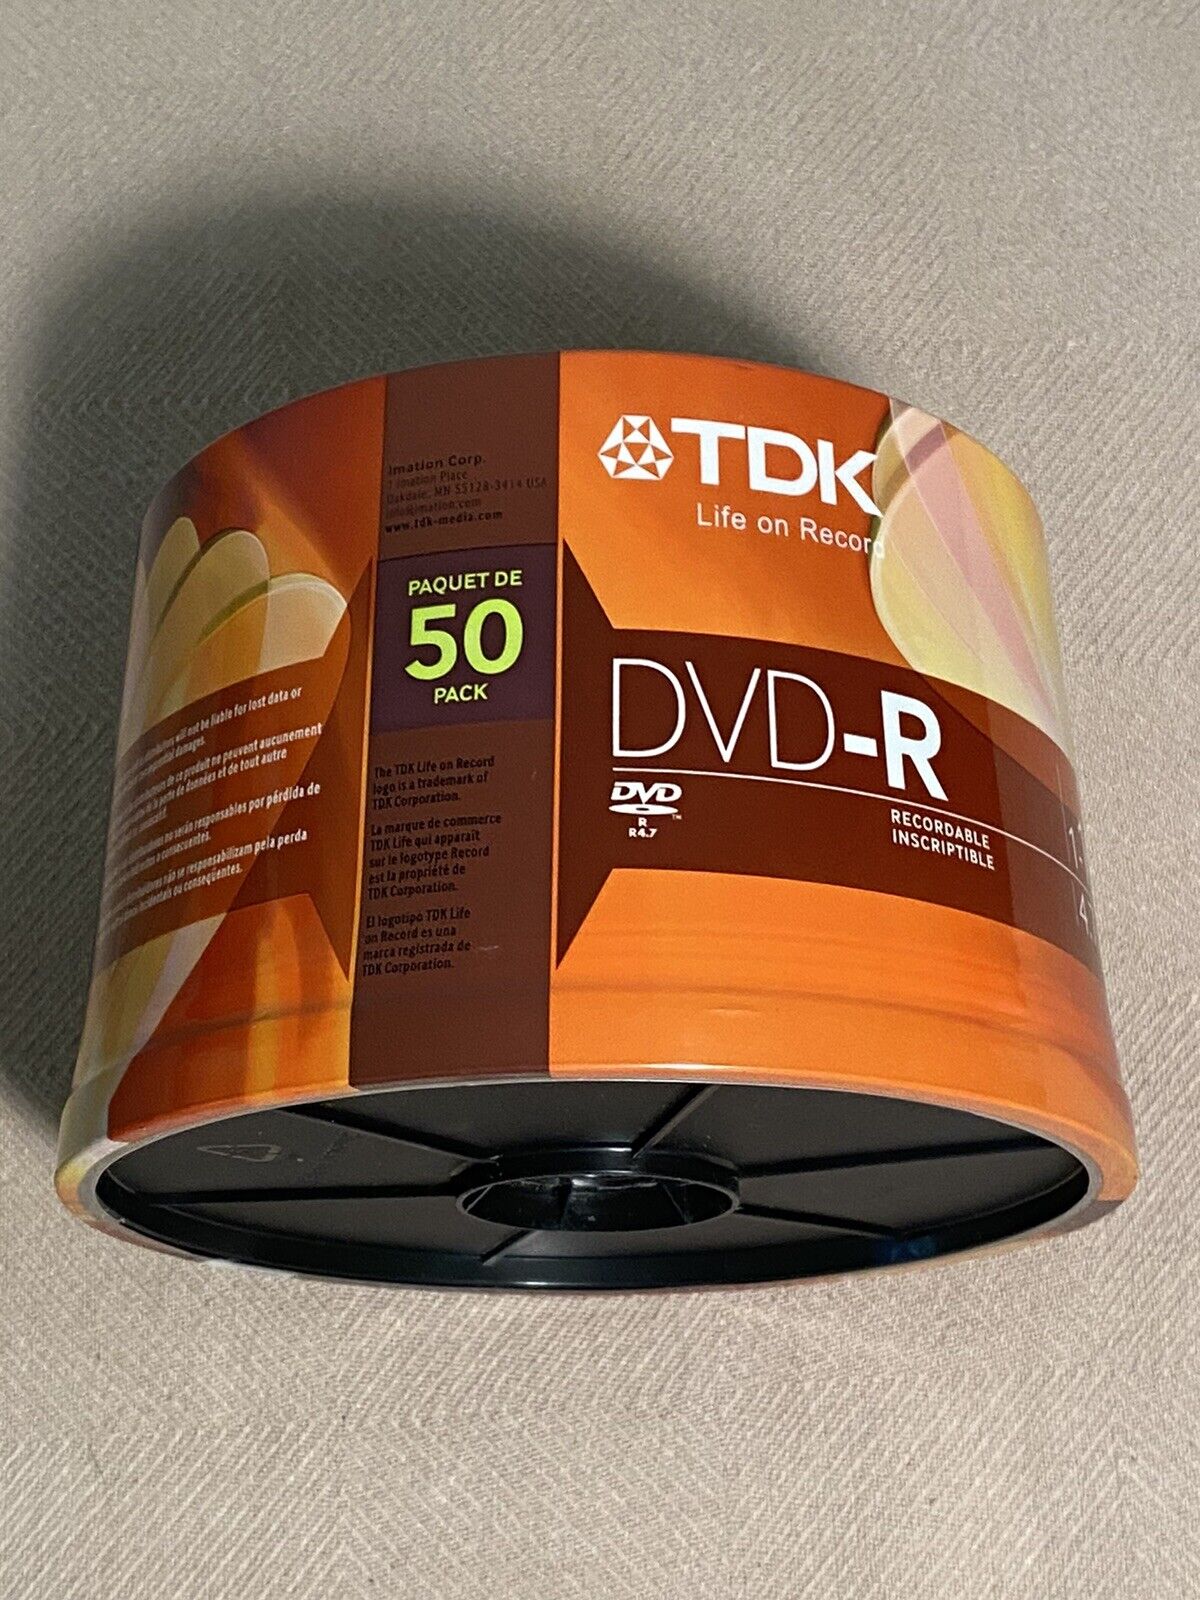 TDK 50 pack Blank DVD New in Box 